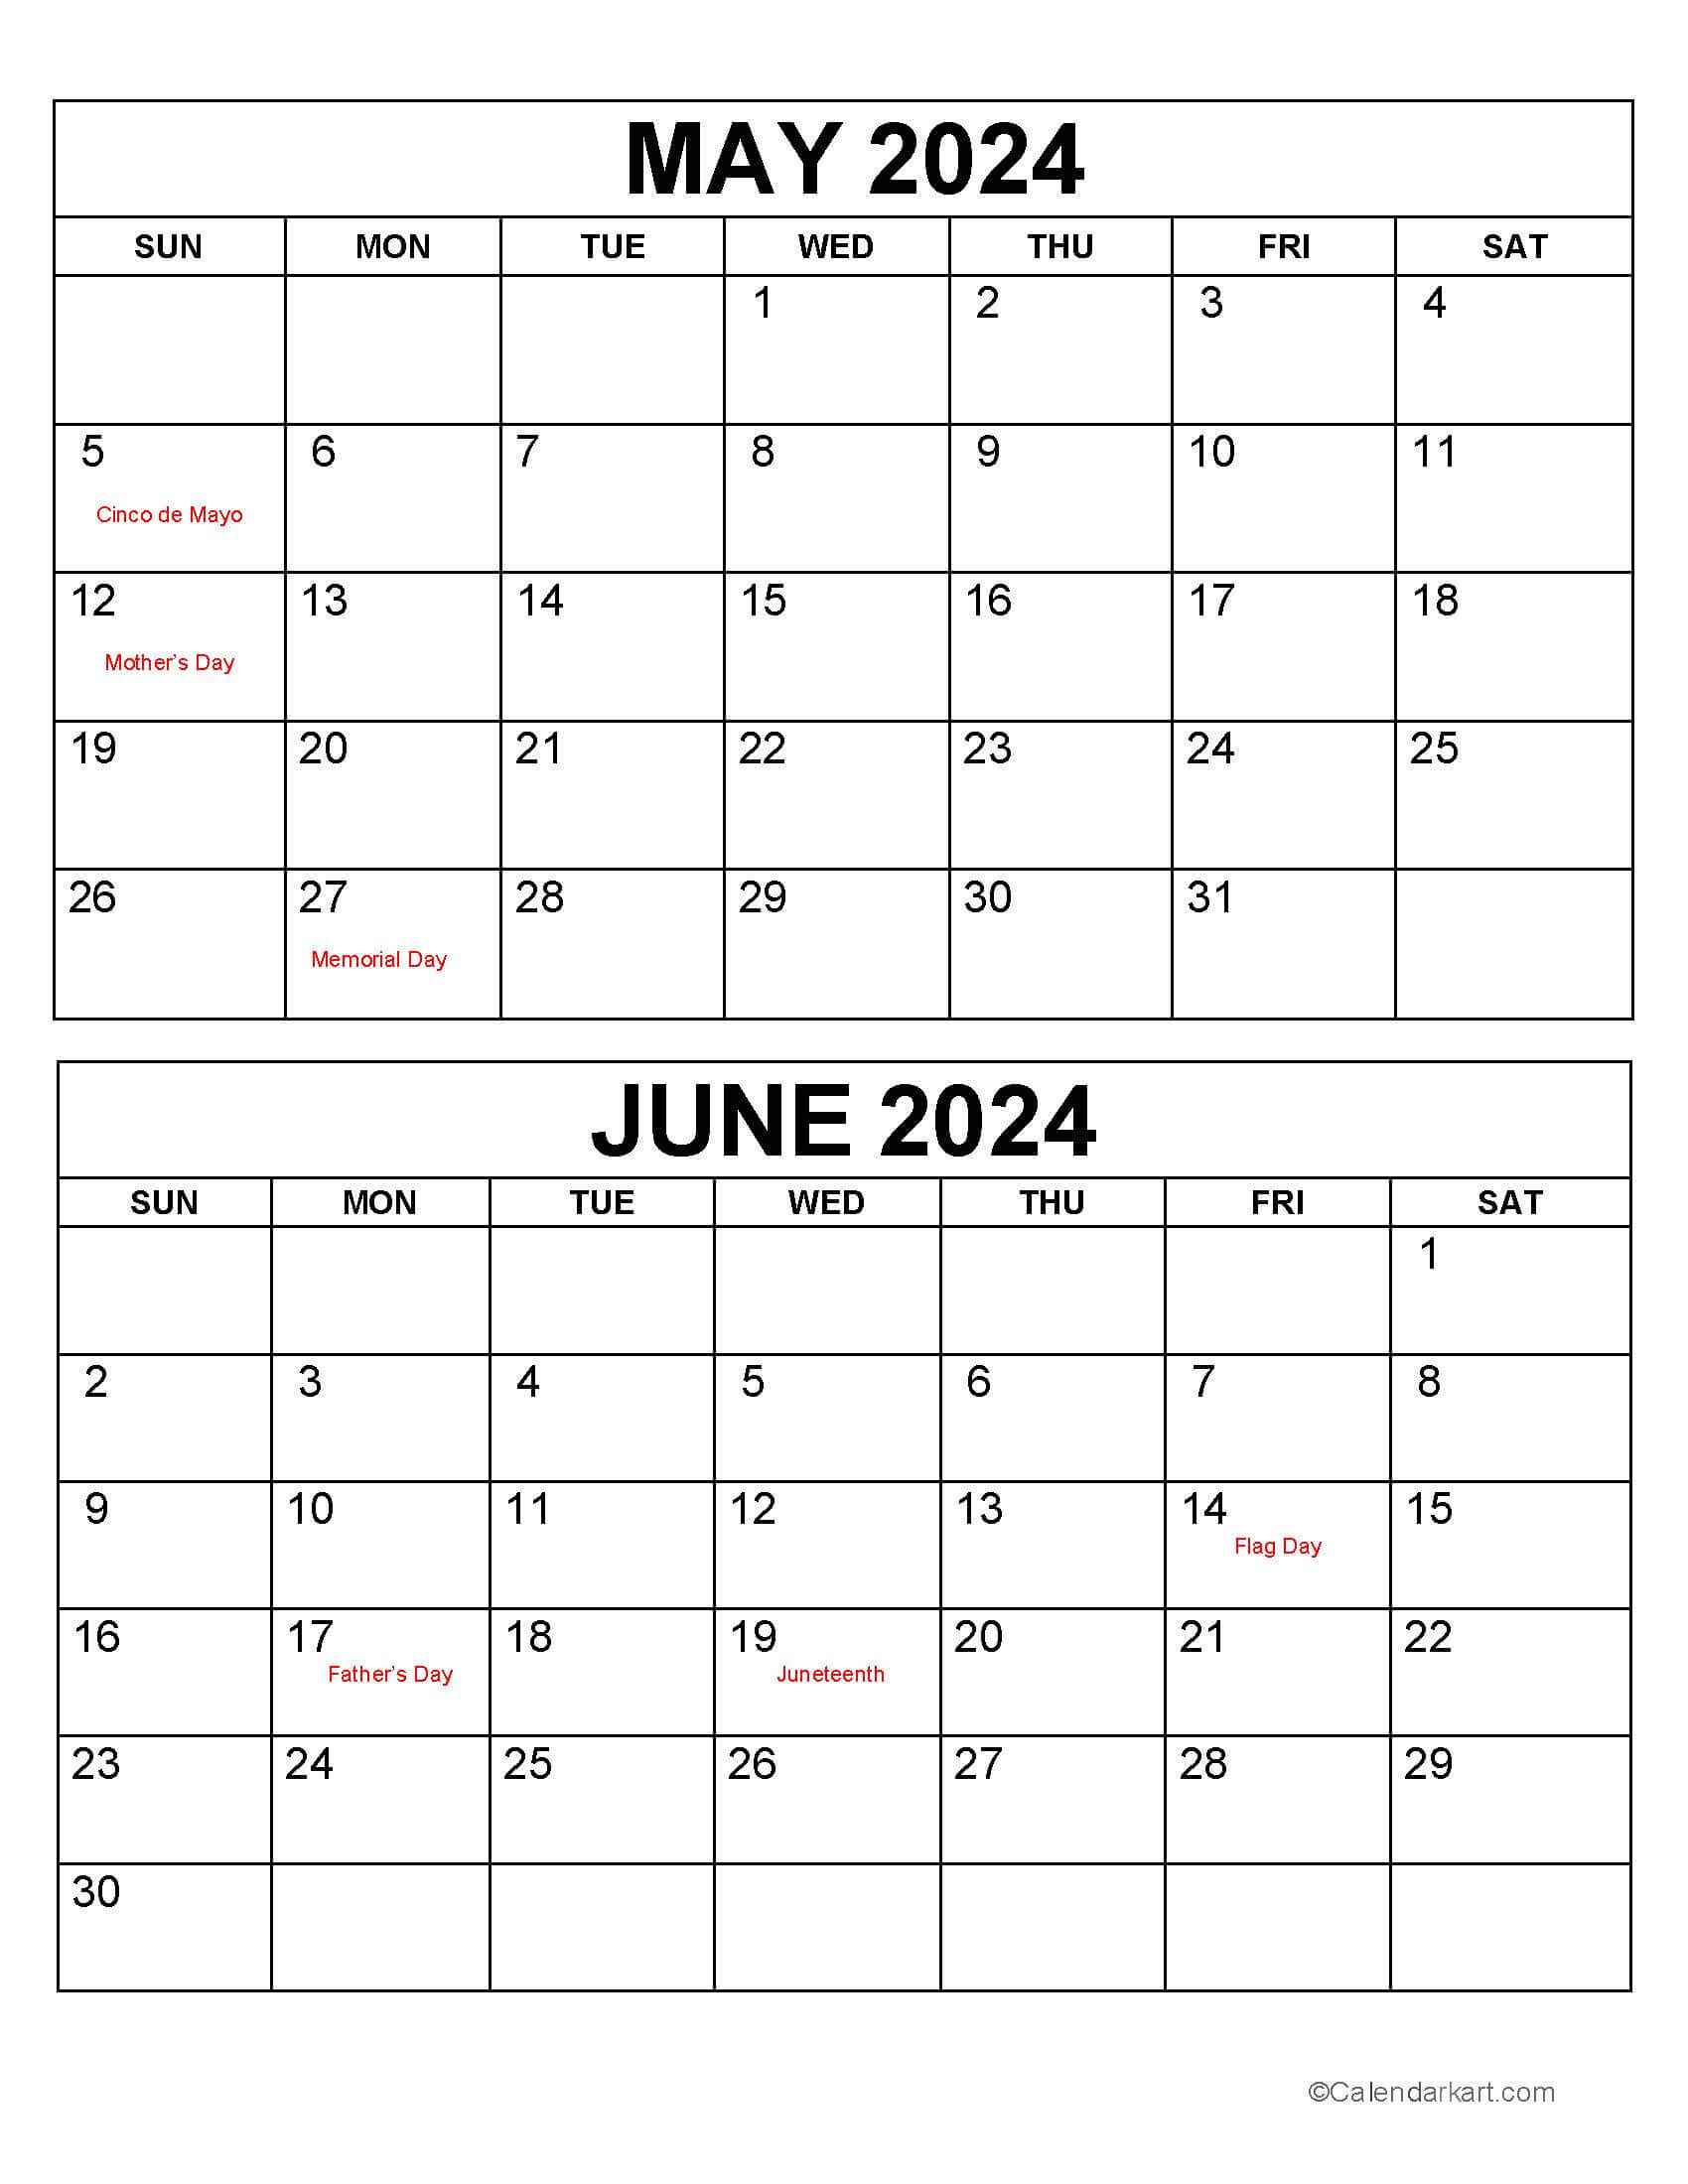 May June 2024 Calendars (3Rd Bi-Monthly) - Calendarkart with Calendar Of May And June 2024